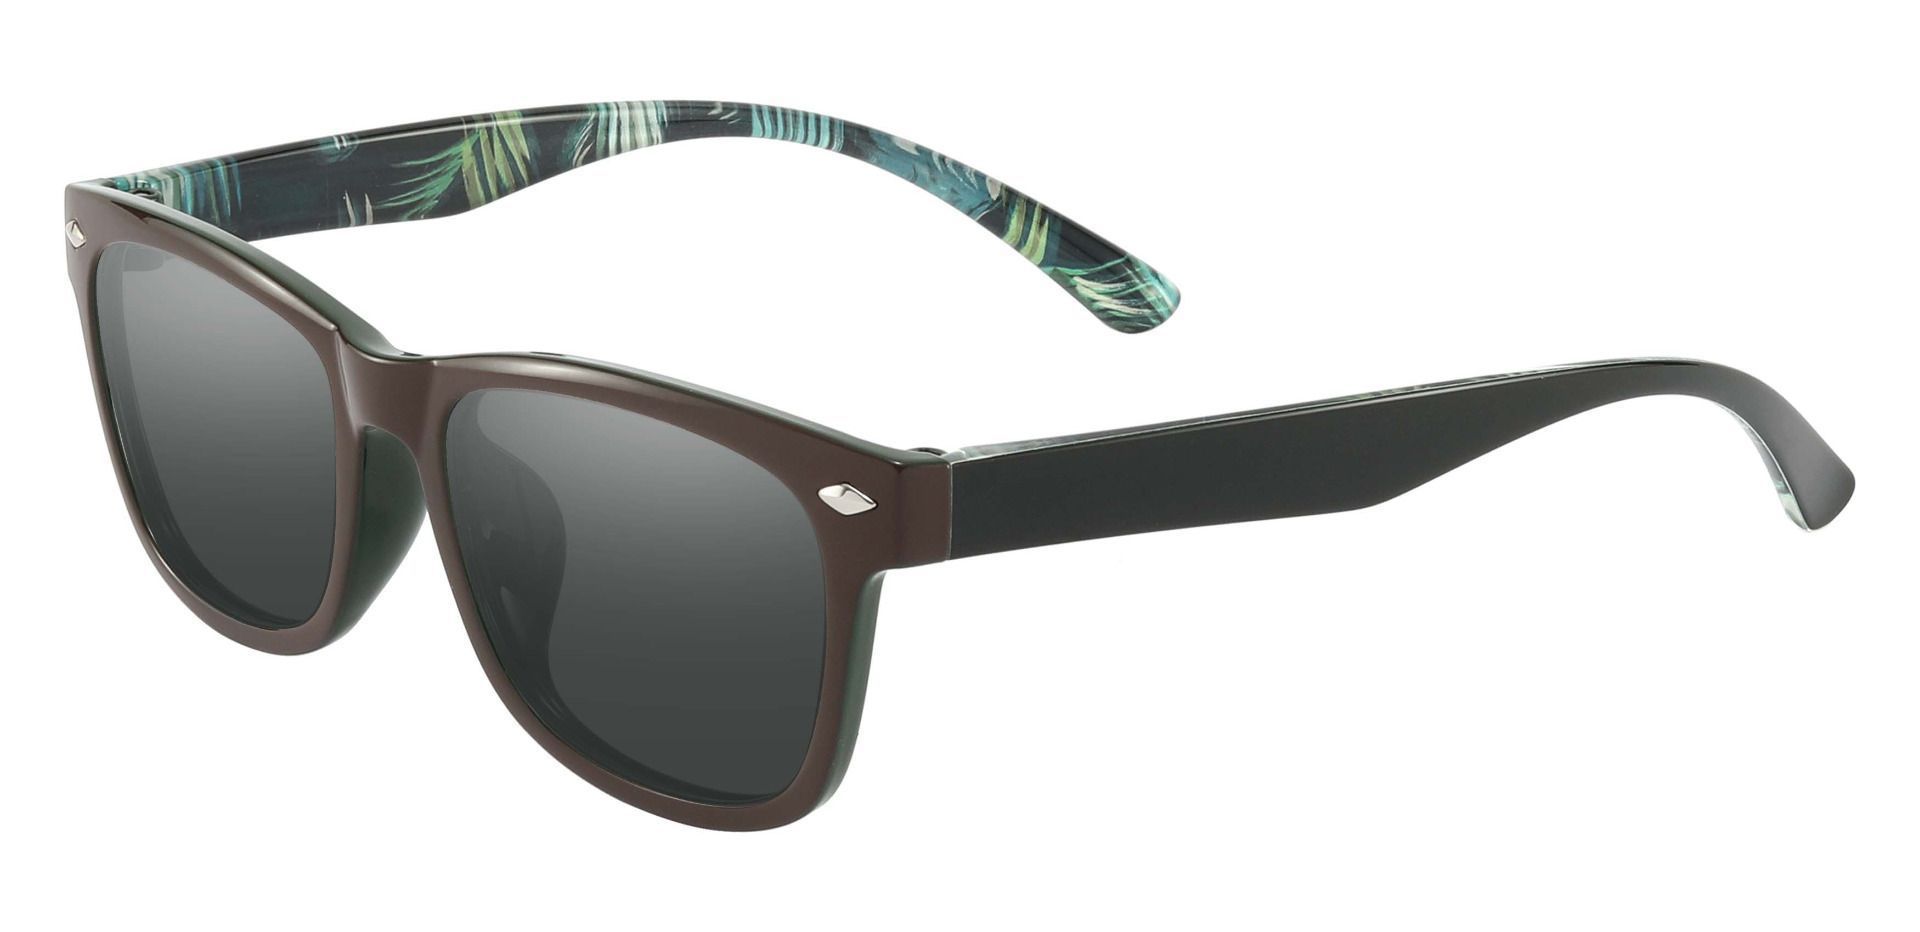 Shaler Square Prescription Sunglasses - Brown Frame With Gray Lenses